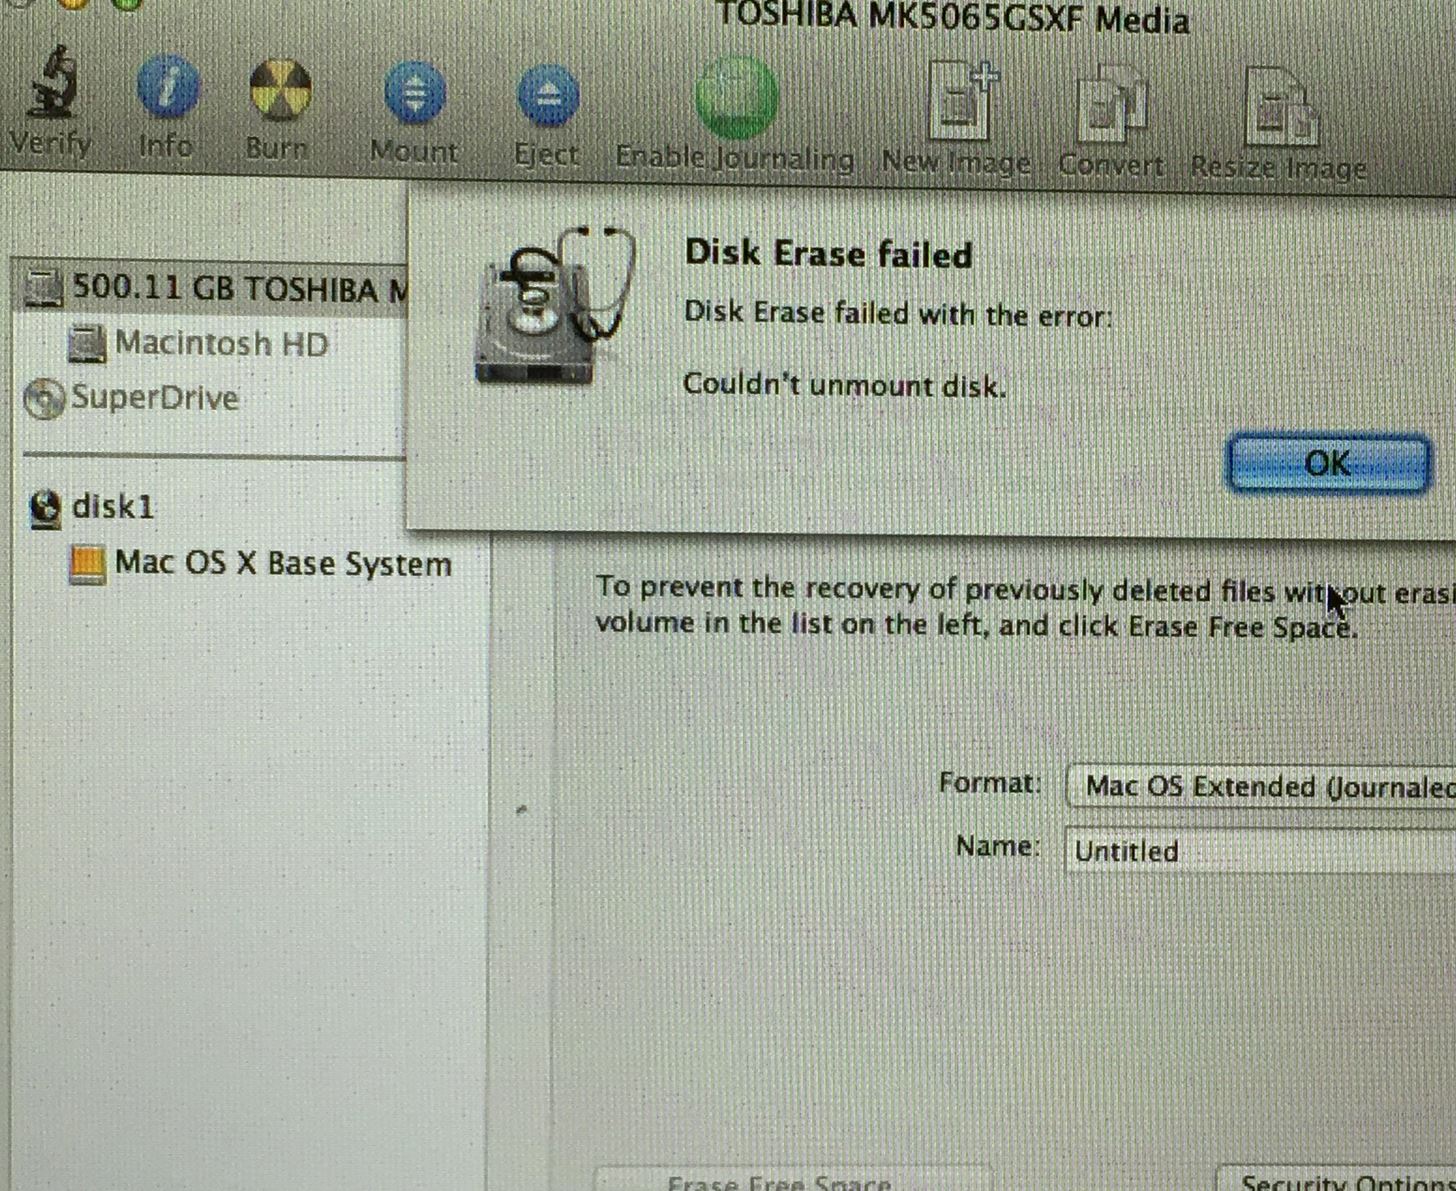 erase process has failed mac couldn t unmount disk